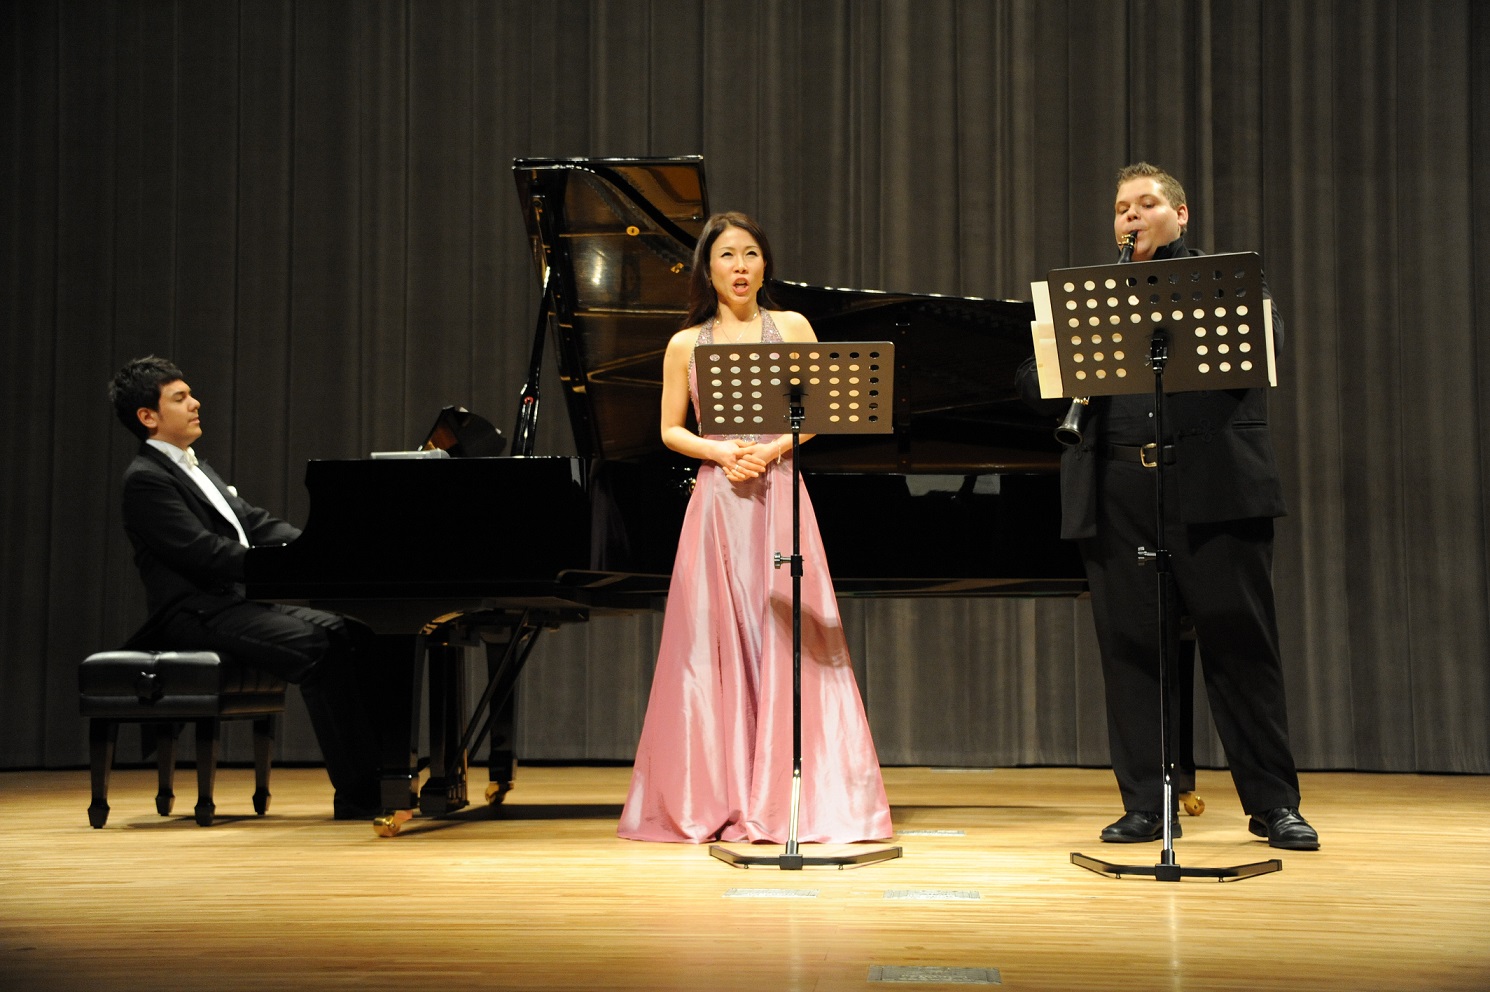 学校法人城西大学が4月20日、「学校法人城西大学創立50周年記念コンサート」を開催